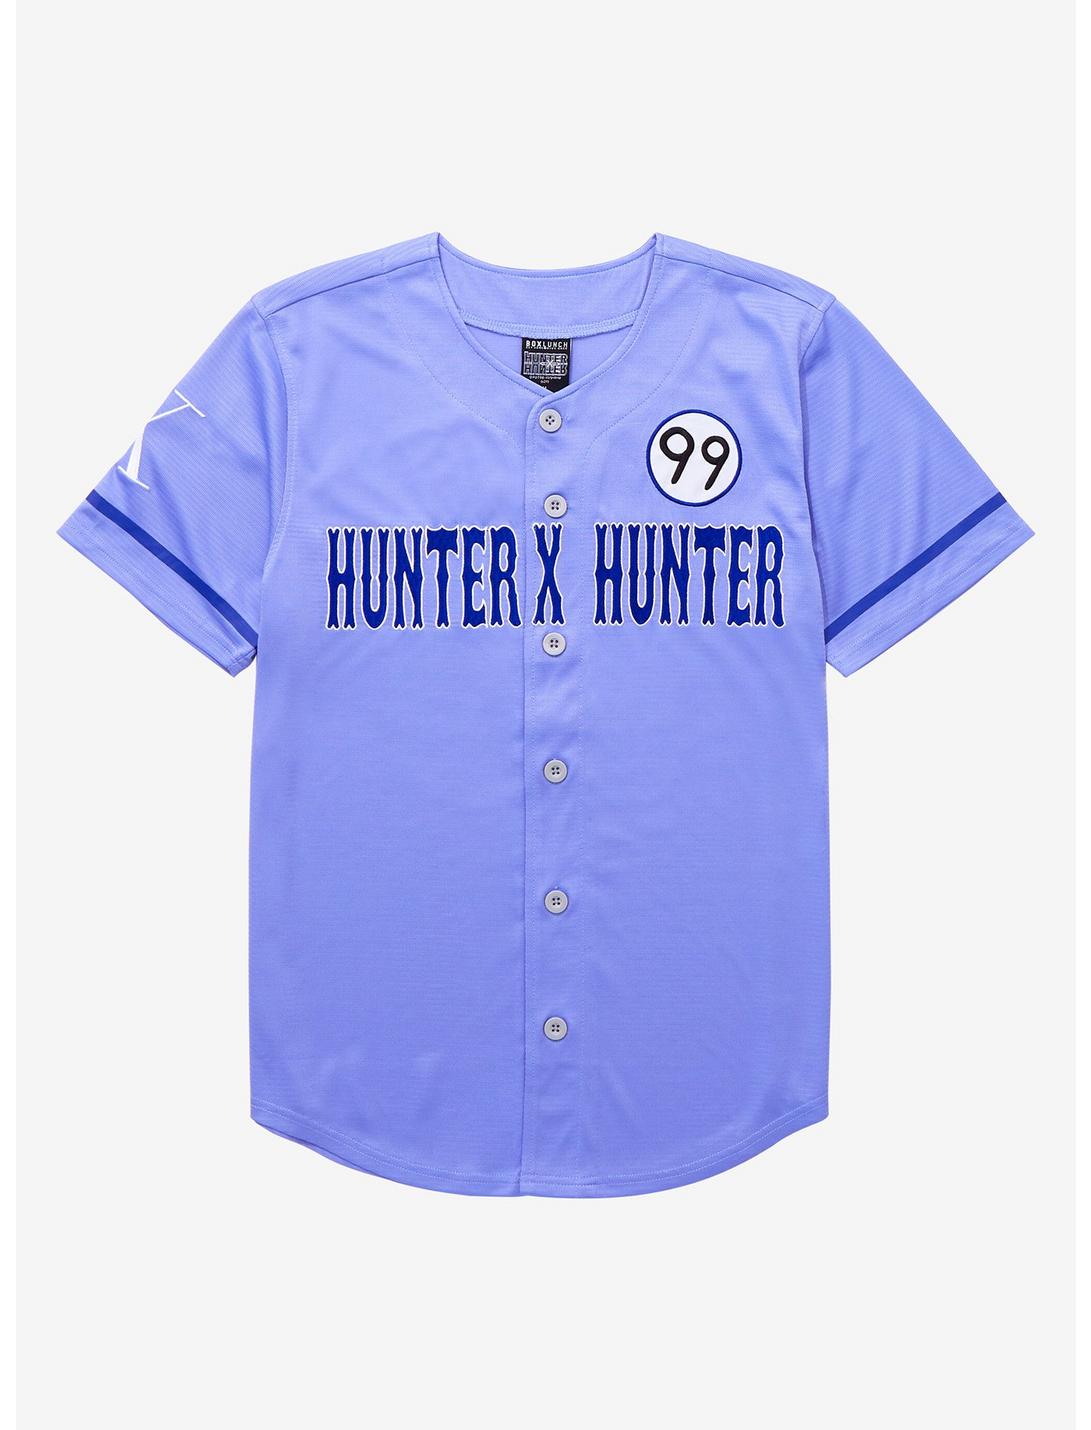 Hunter x Hunter Killua Zoldyck Baseball Jersey - BoxLunch Exclusive, LILAC, hi-res